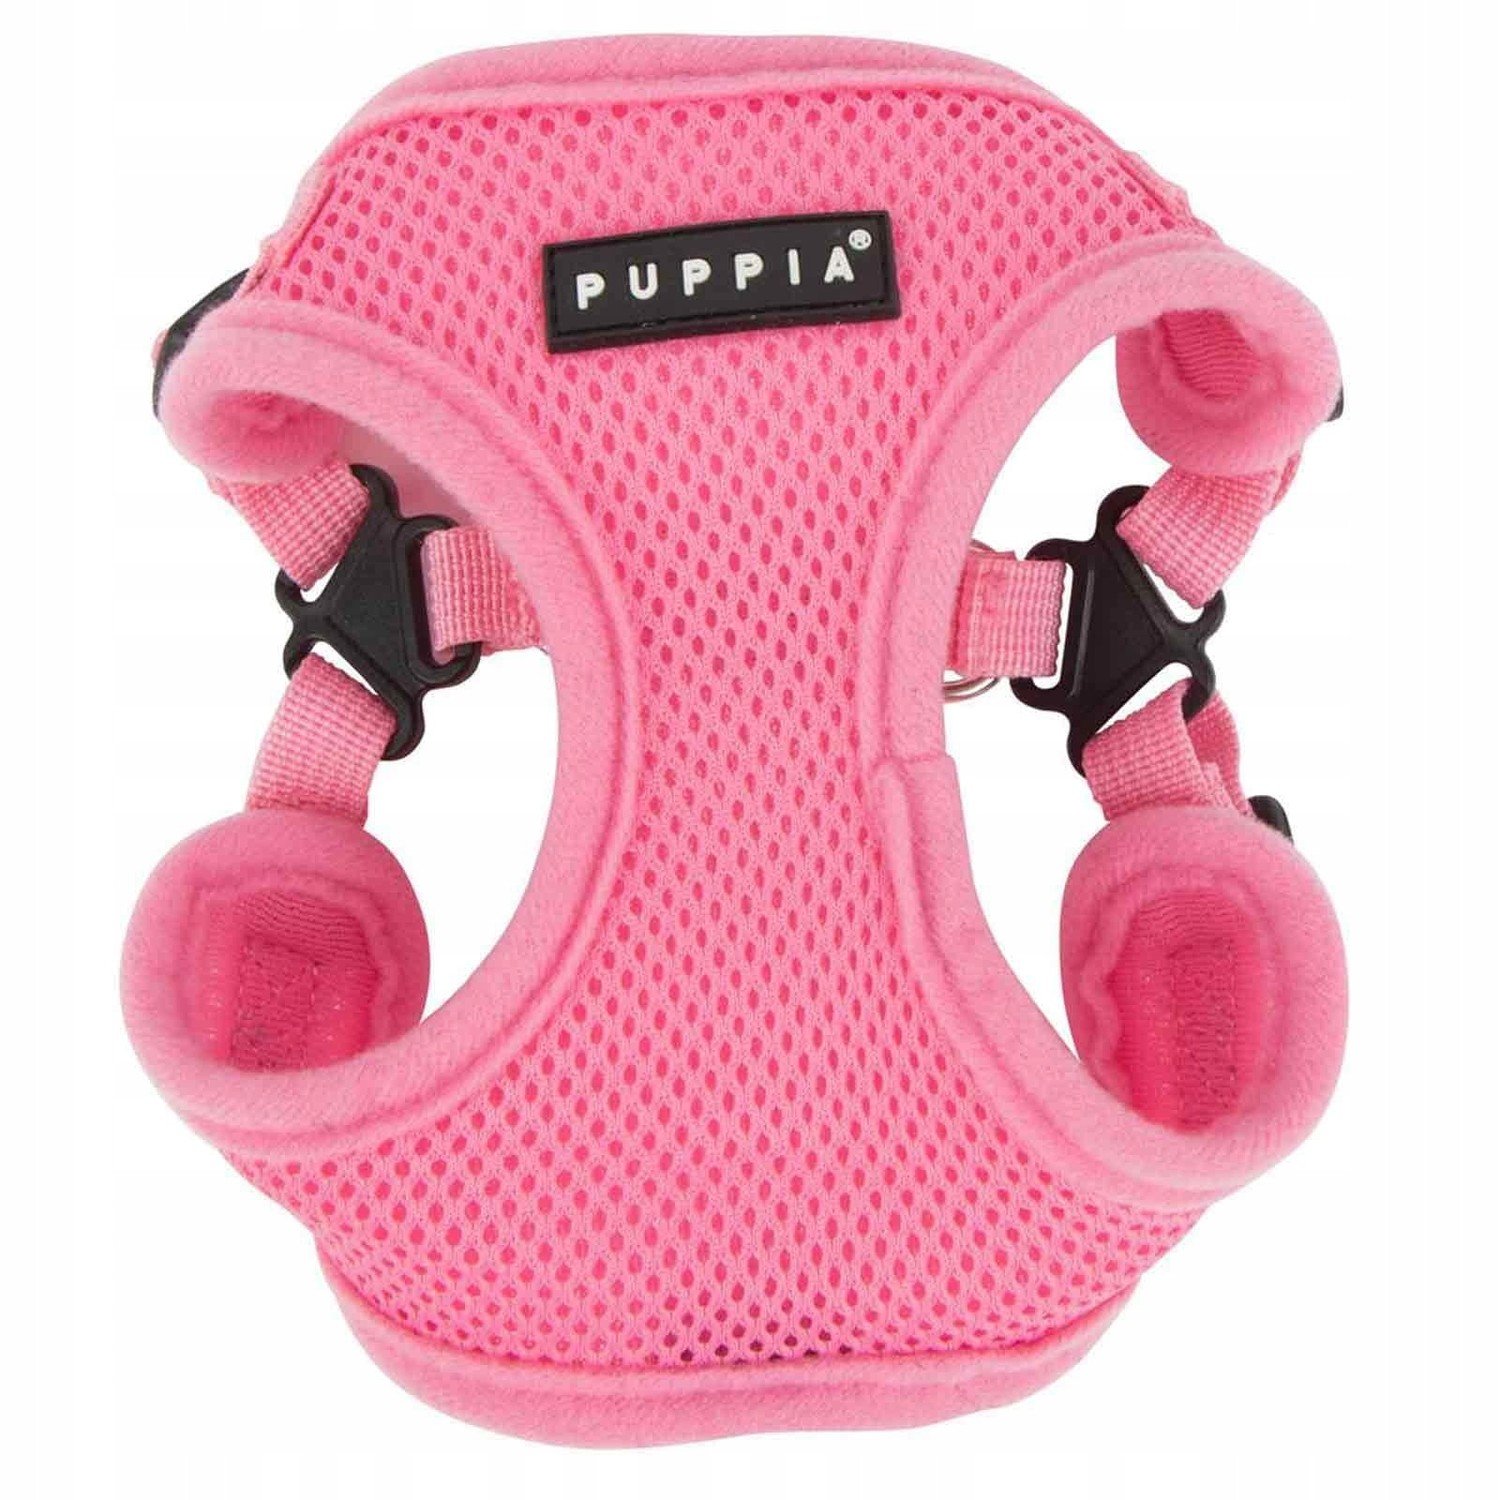 Postroj pro psa Puppia soft růžový typ C vel. XL